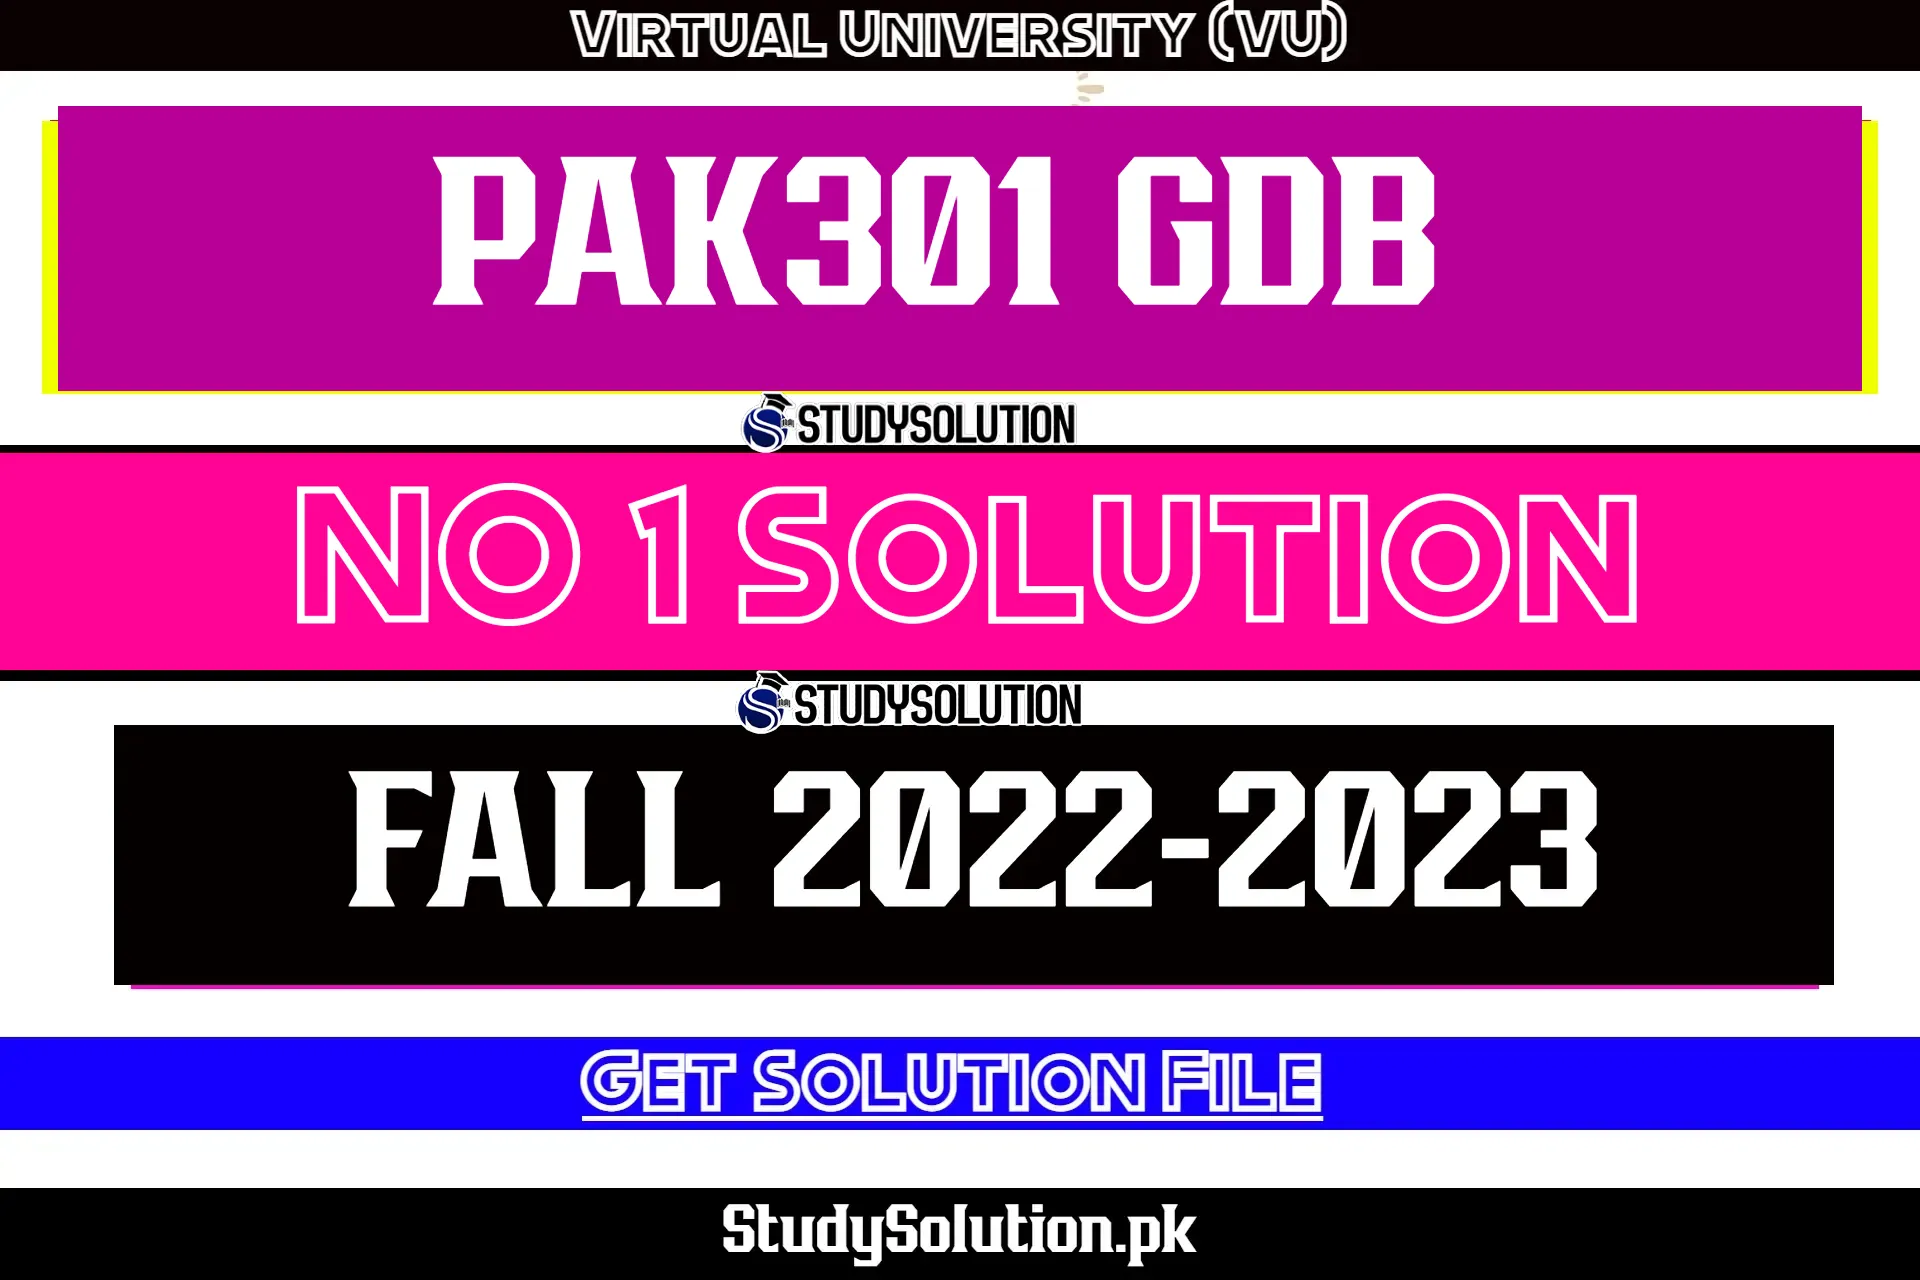 PAK301 GDB No 1 Solution Fall 2022